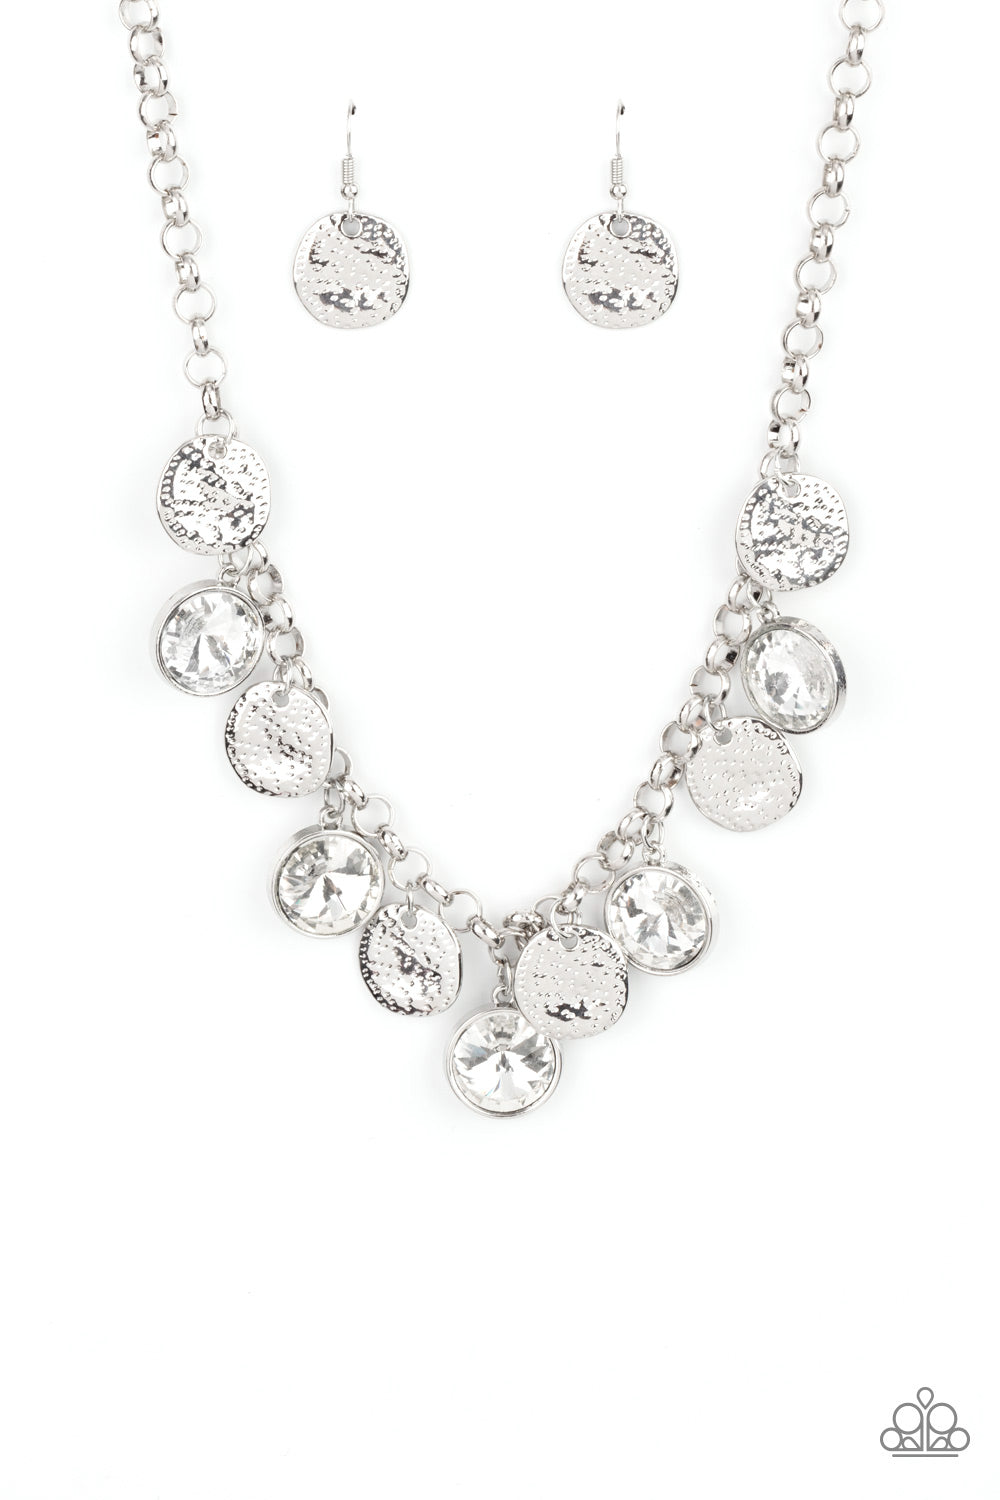 Spot On Sparkle - white - Paparazzi necklace